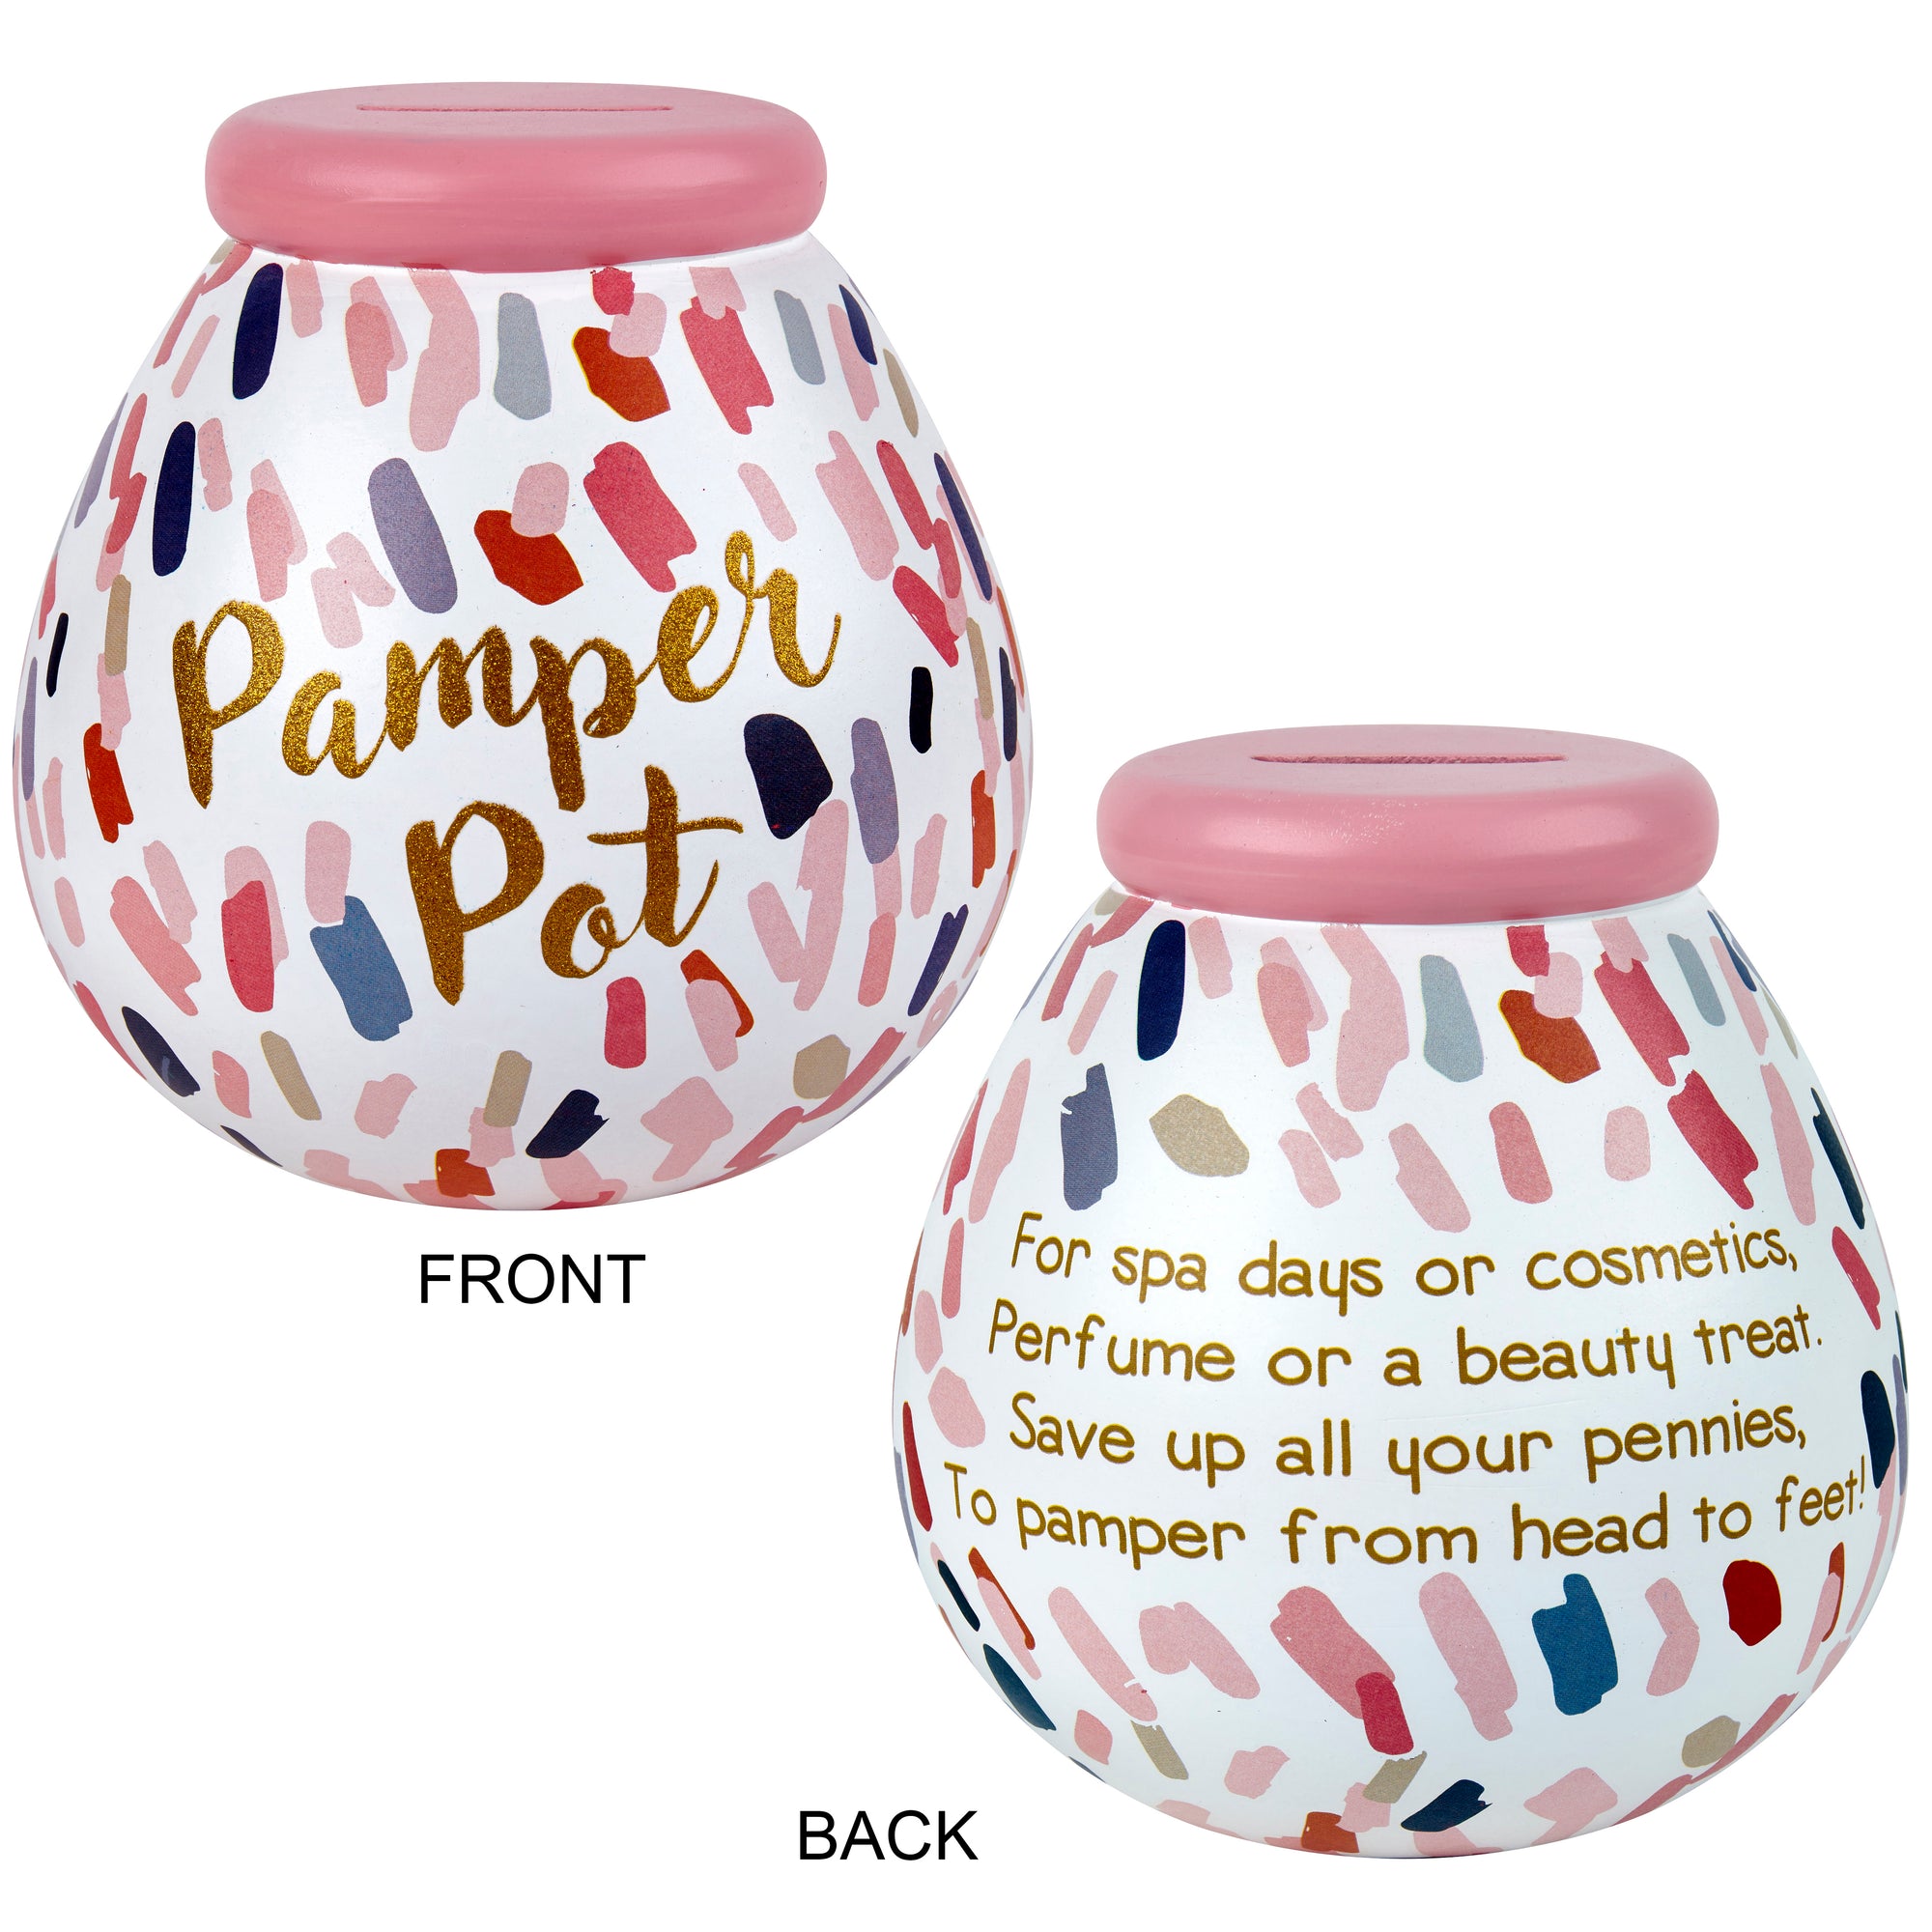 Pamper Pot Money Jar